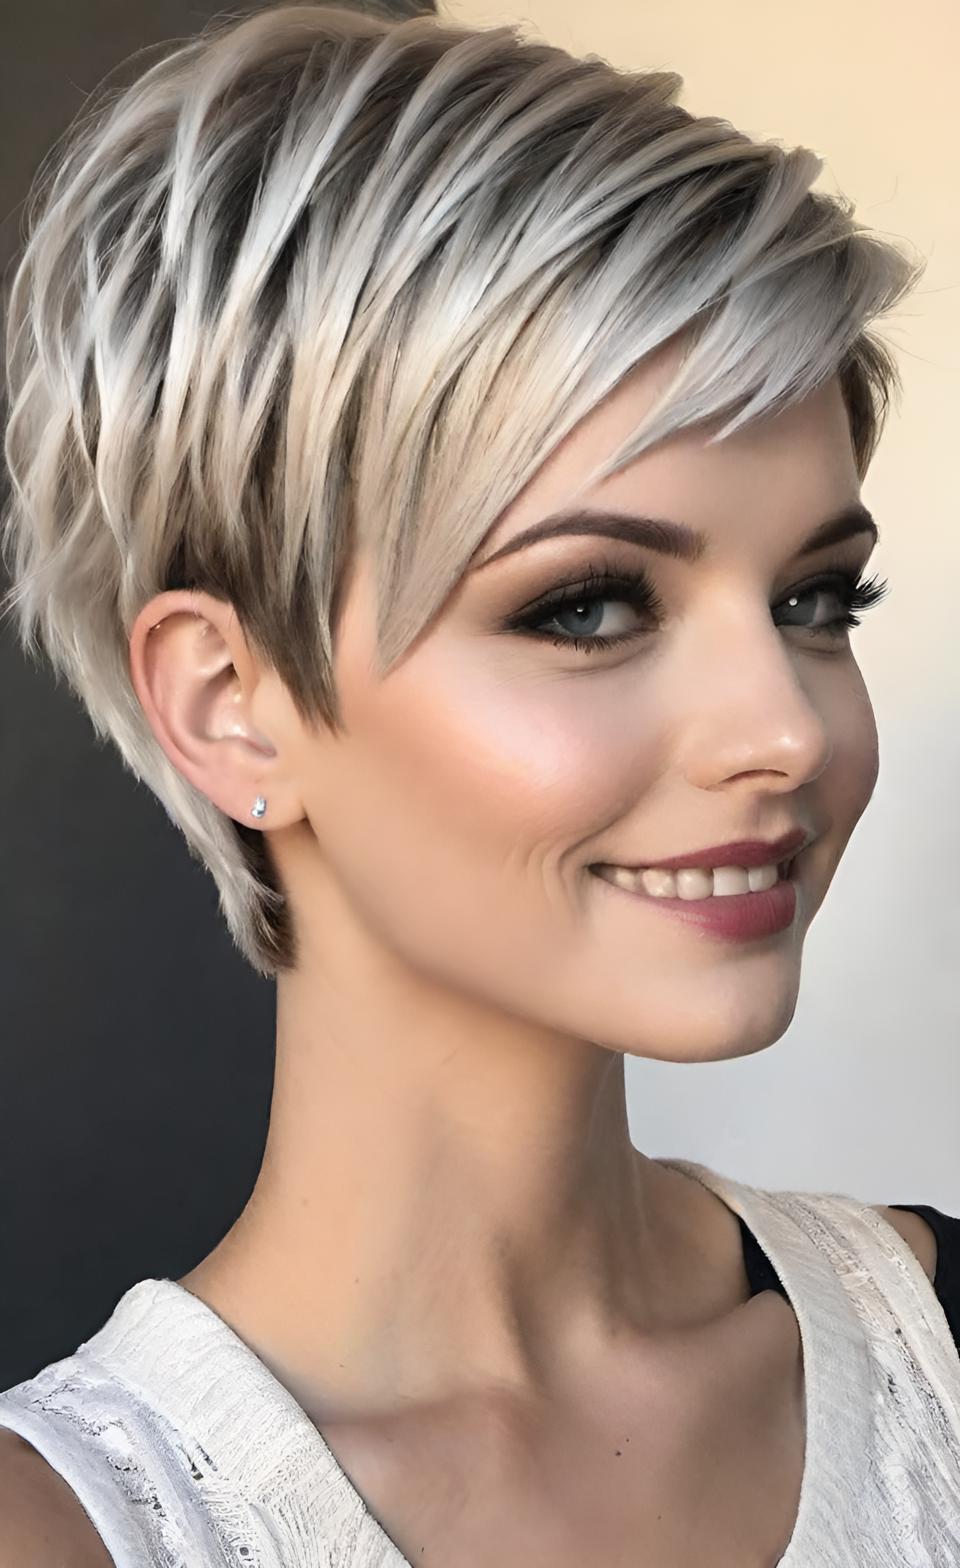 very beautifull short hair styling ideas